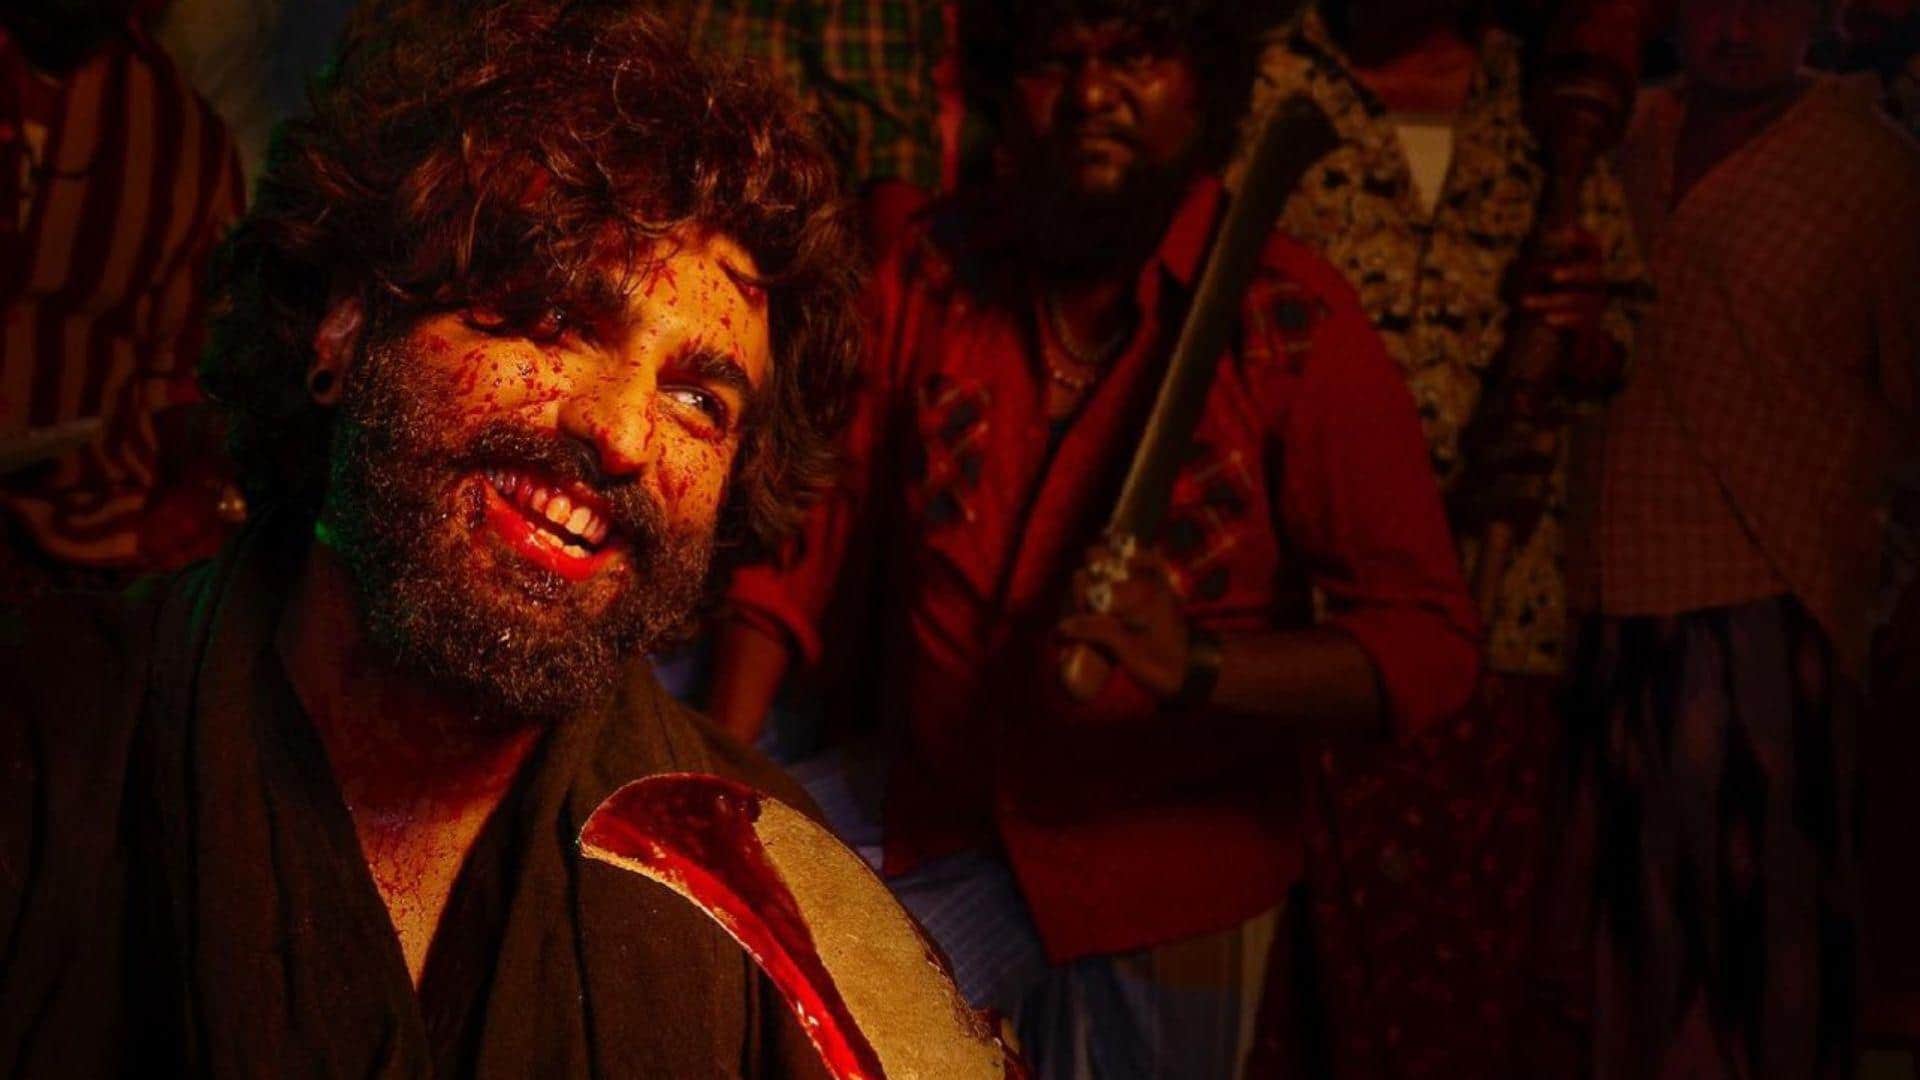 'Danger Lanka' is Arjun Kapoor's character name in 'Singham Again'